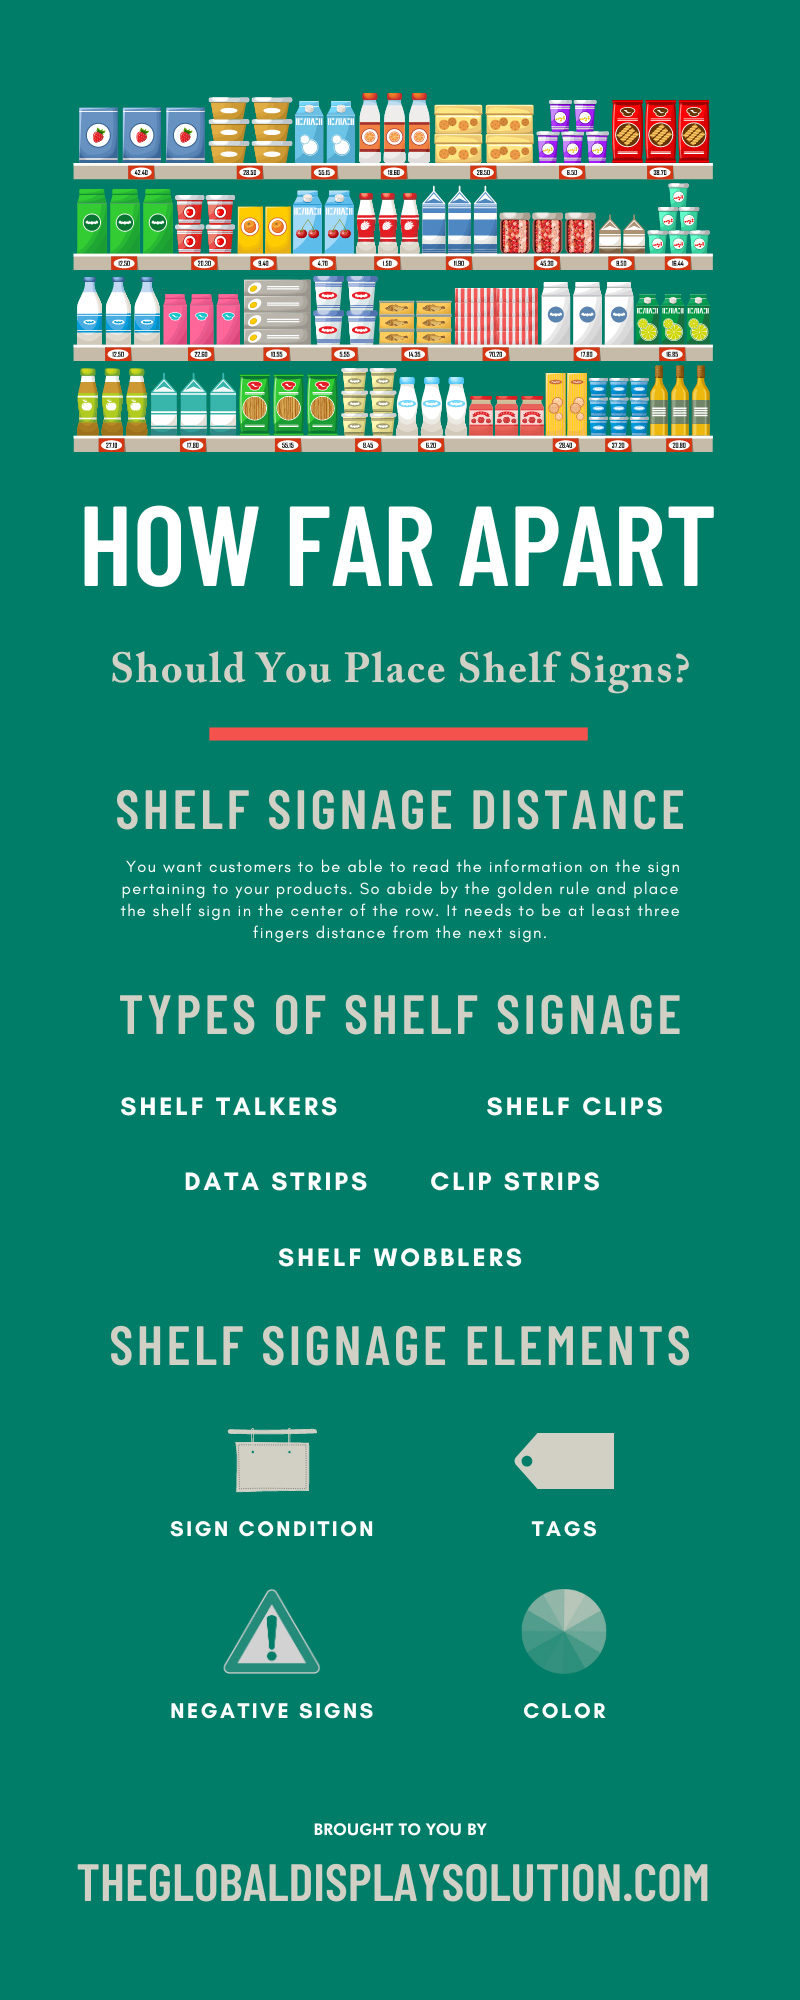 How Far Apart Should You Place Shelf Signs?